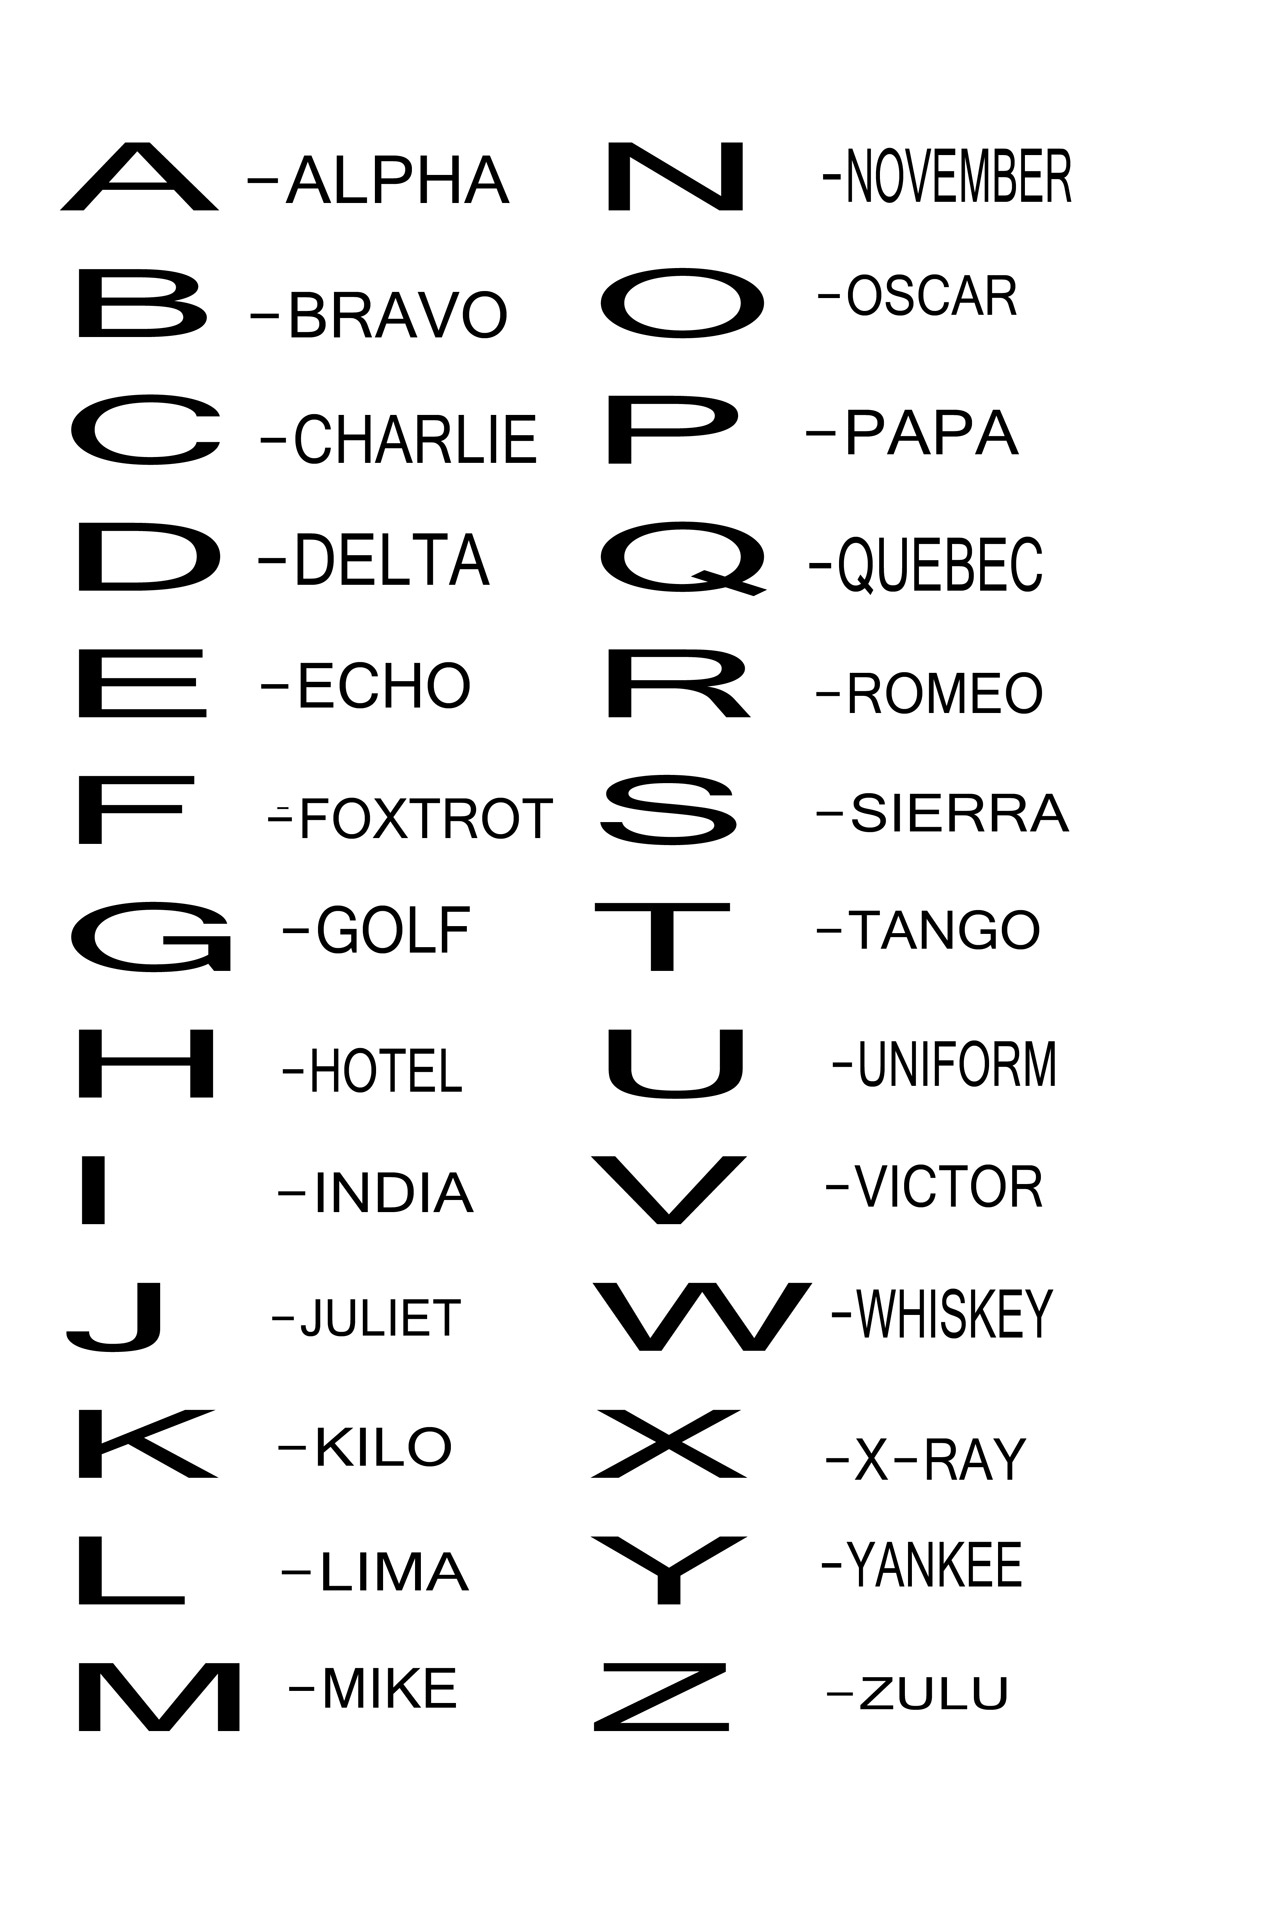 Military Nato Phonetic Alphabet Chart : Military uses the same phonetic